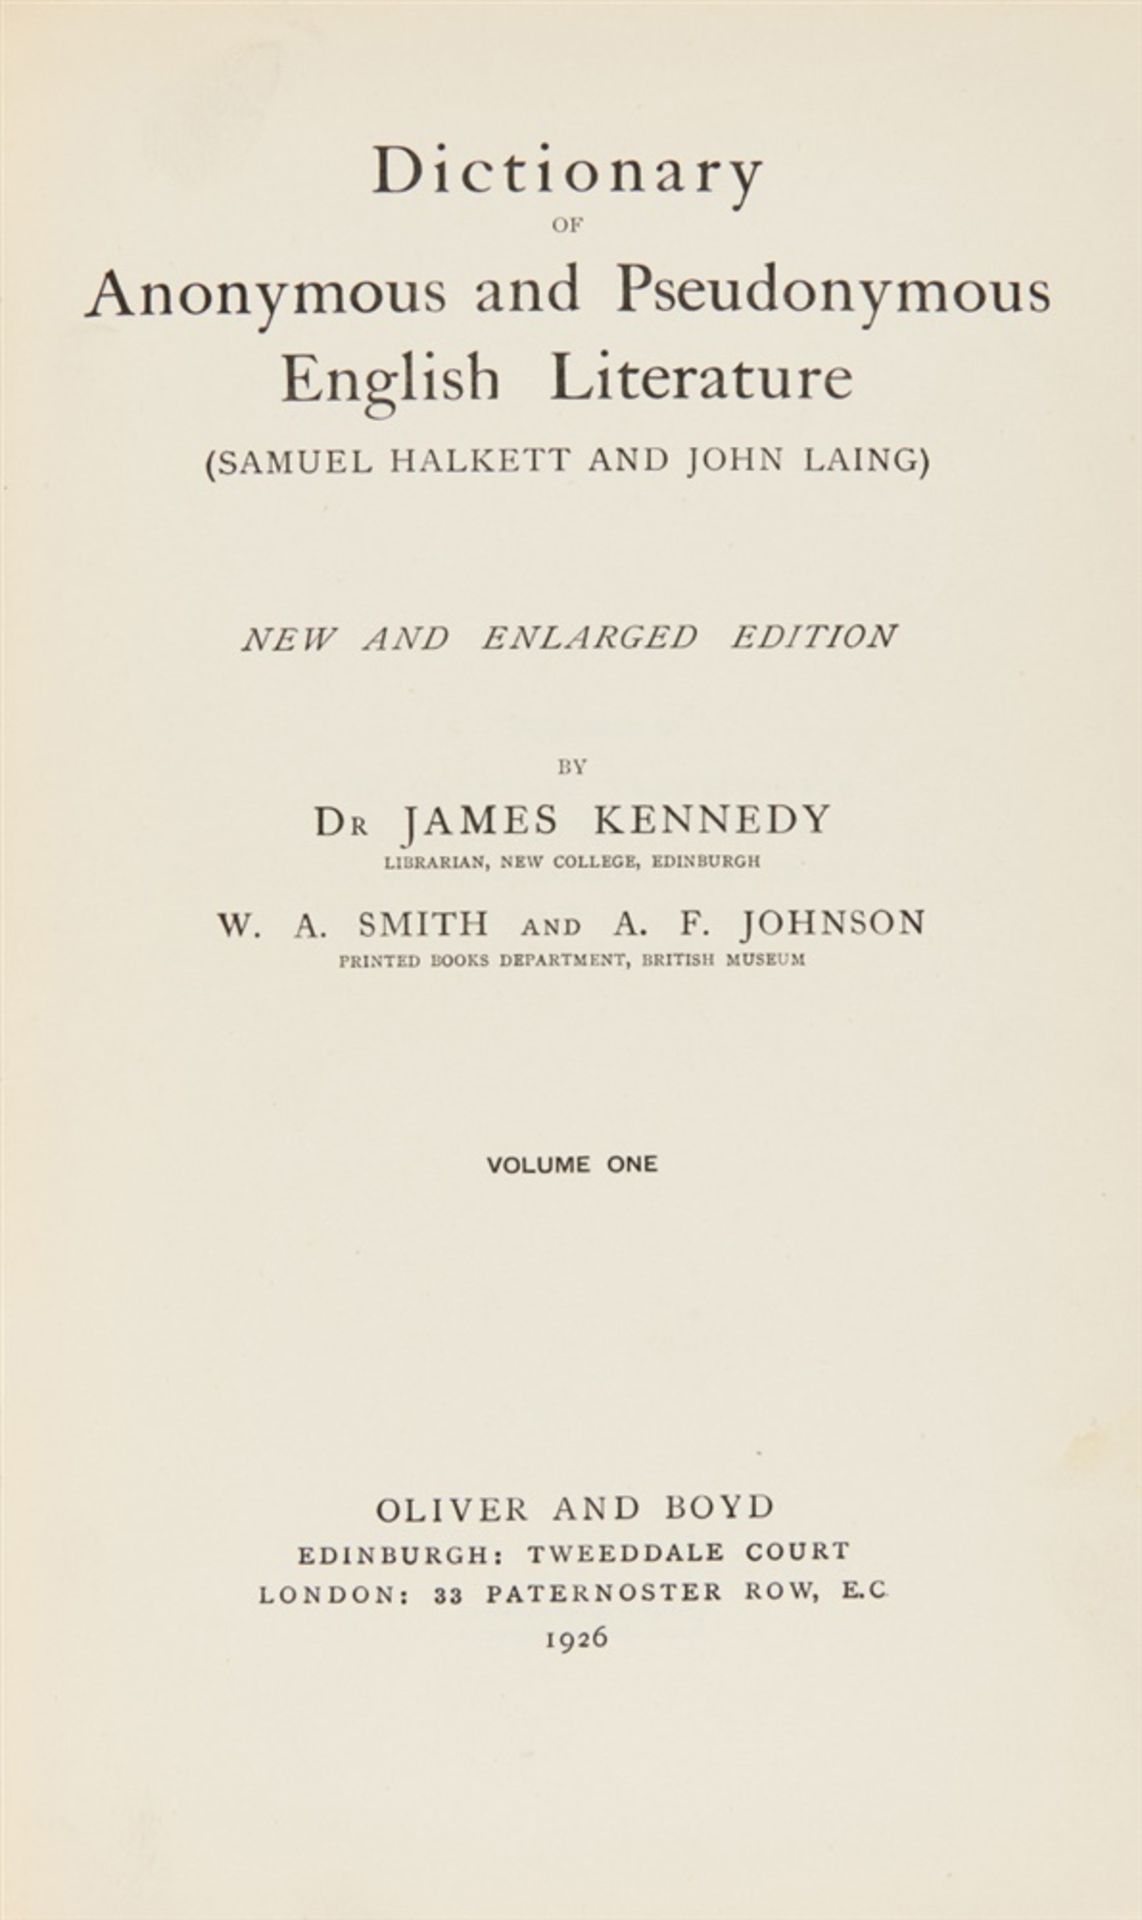 Halkett, Samuel u. John Laing: Dictionary of anonymous and pseudonymous English literature. New